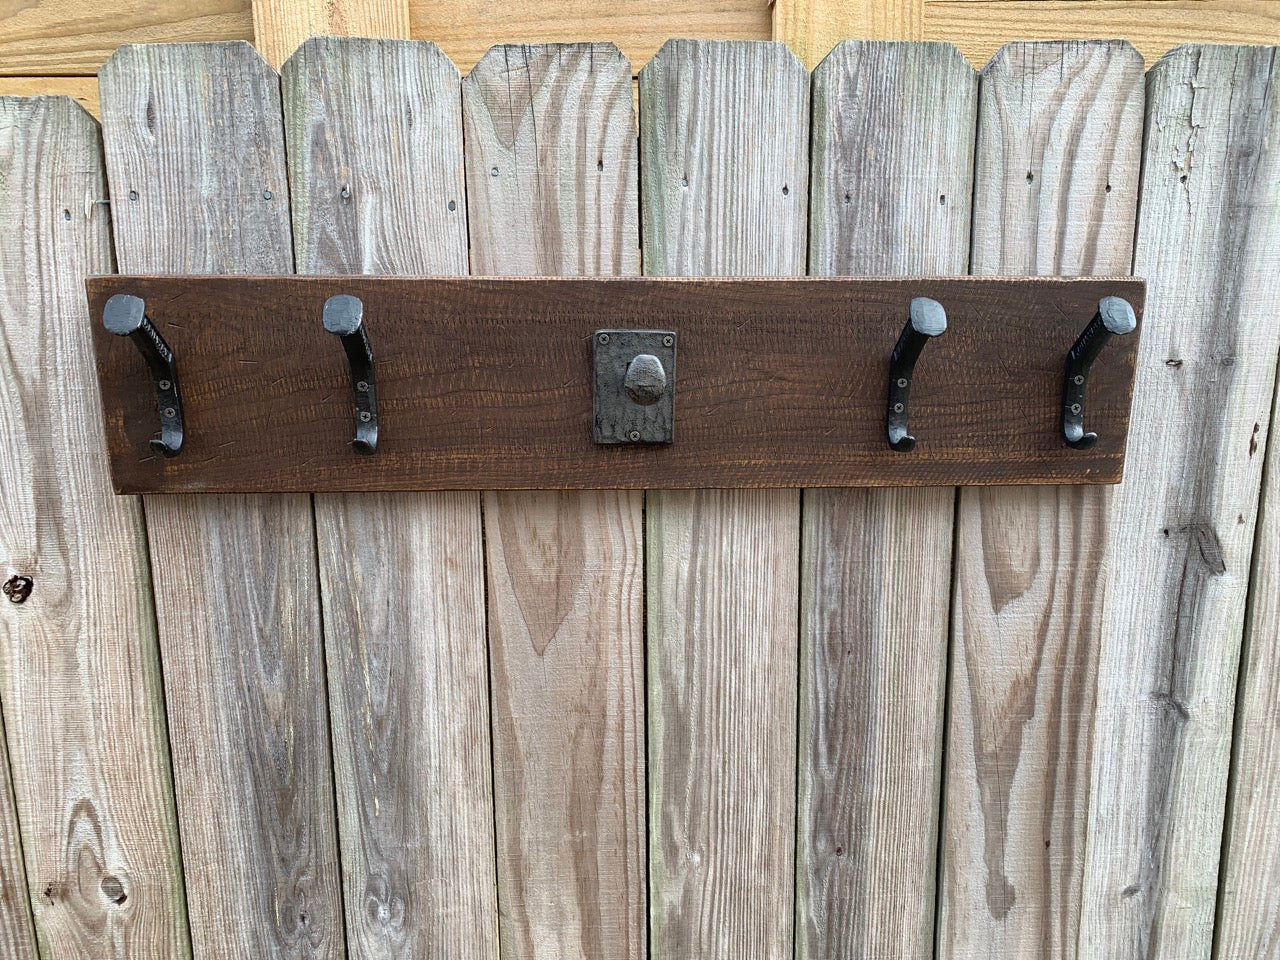 Rustic Reclaimed Wooden Wall Rack for Hats, Caps, & Coats – Magnolia Oaks  Woodshop